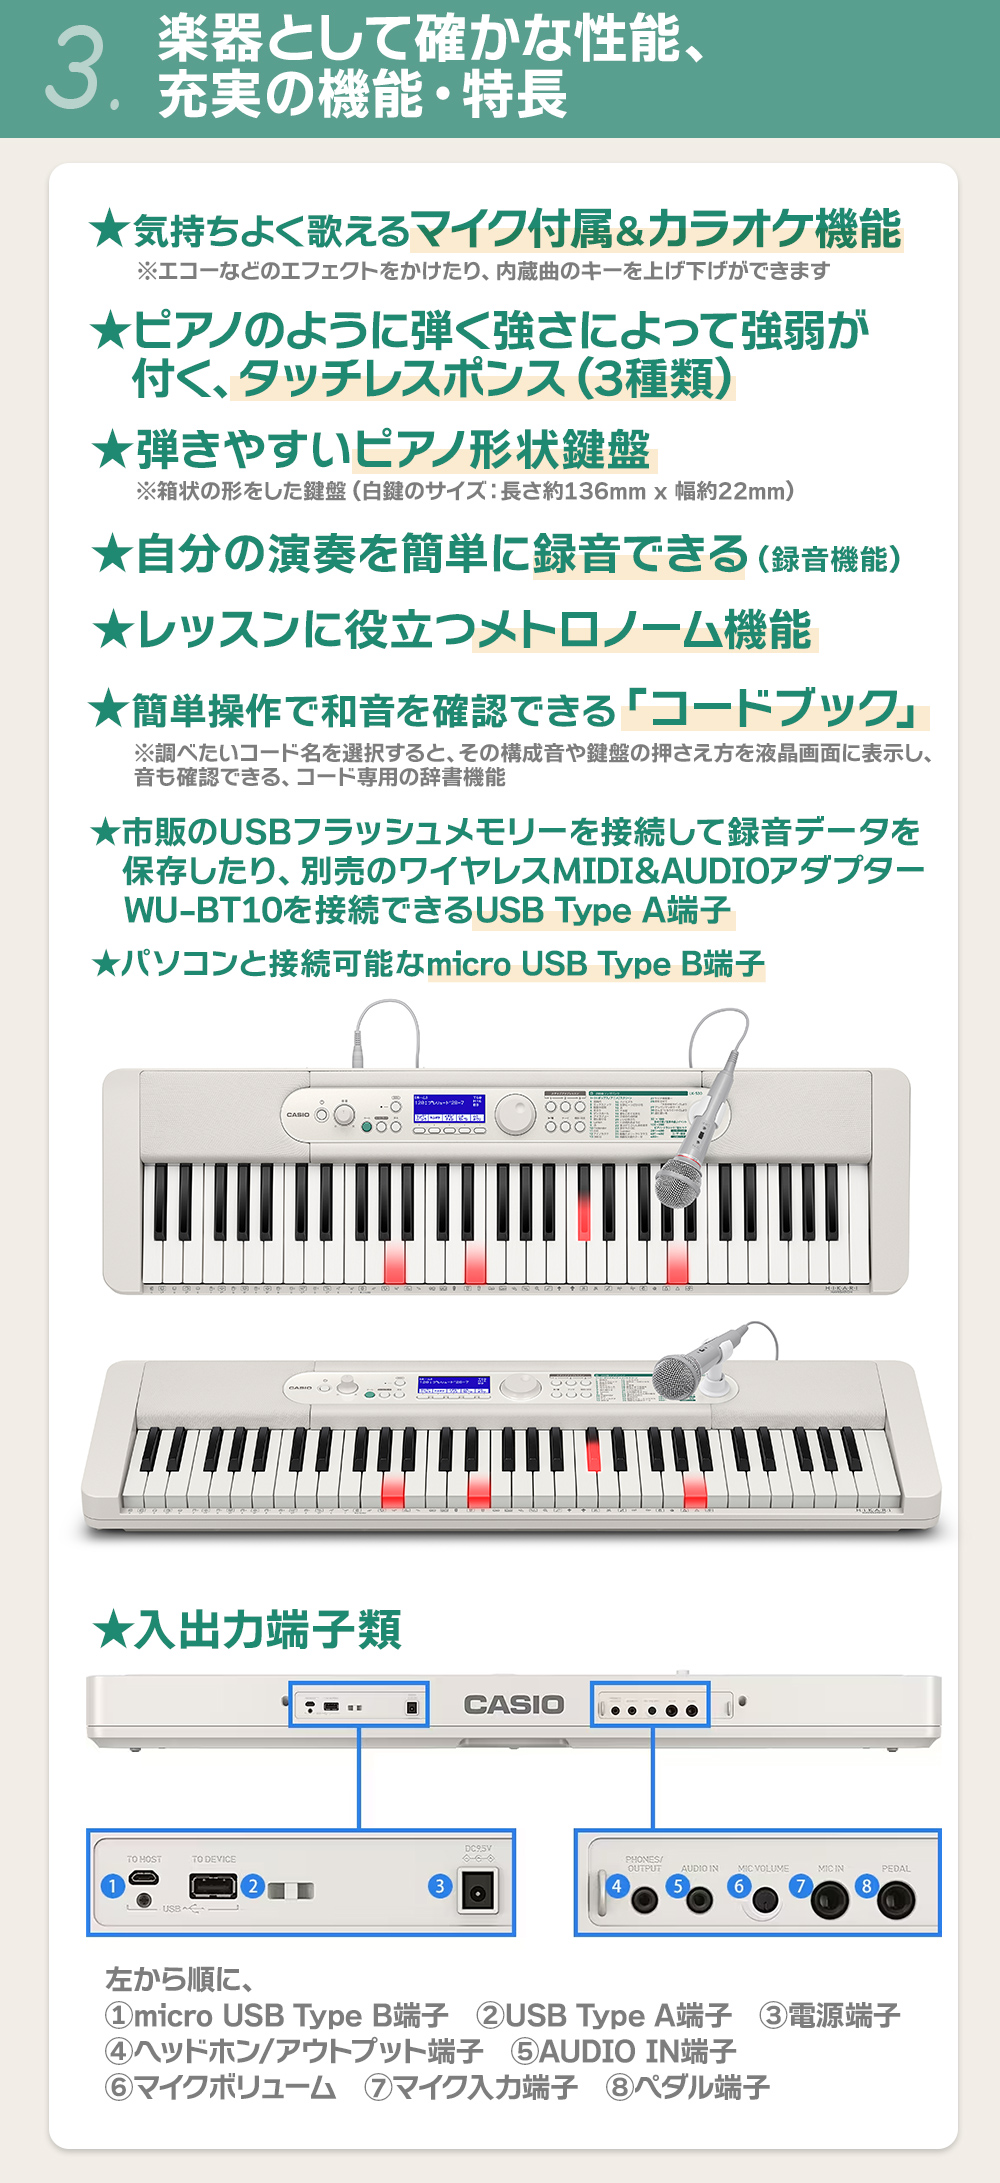 CASIO 光ナビゲーションキーボード スタンド付き - 鍵盤楽器